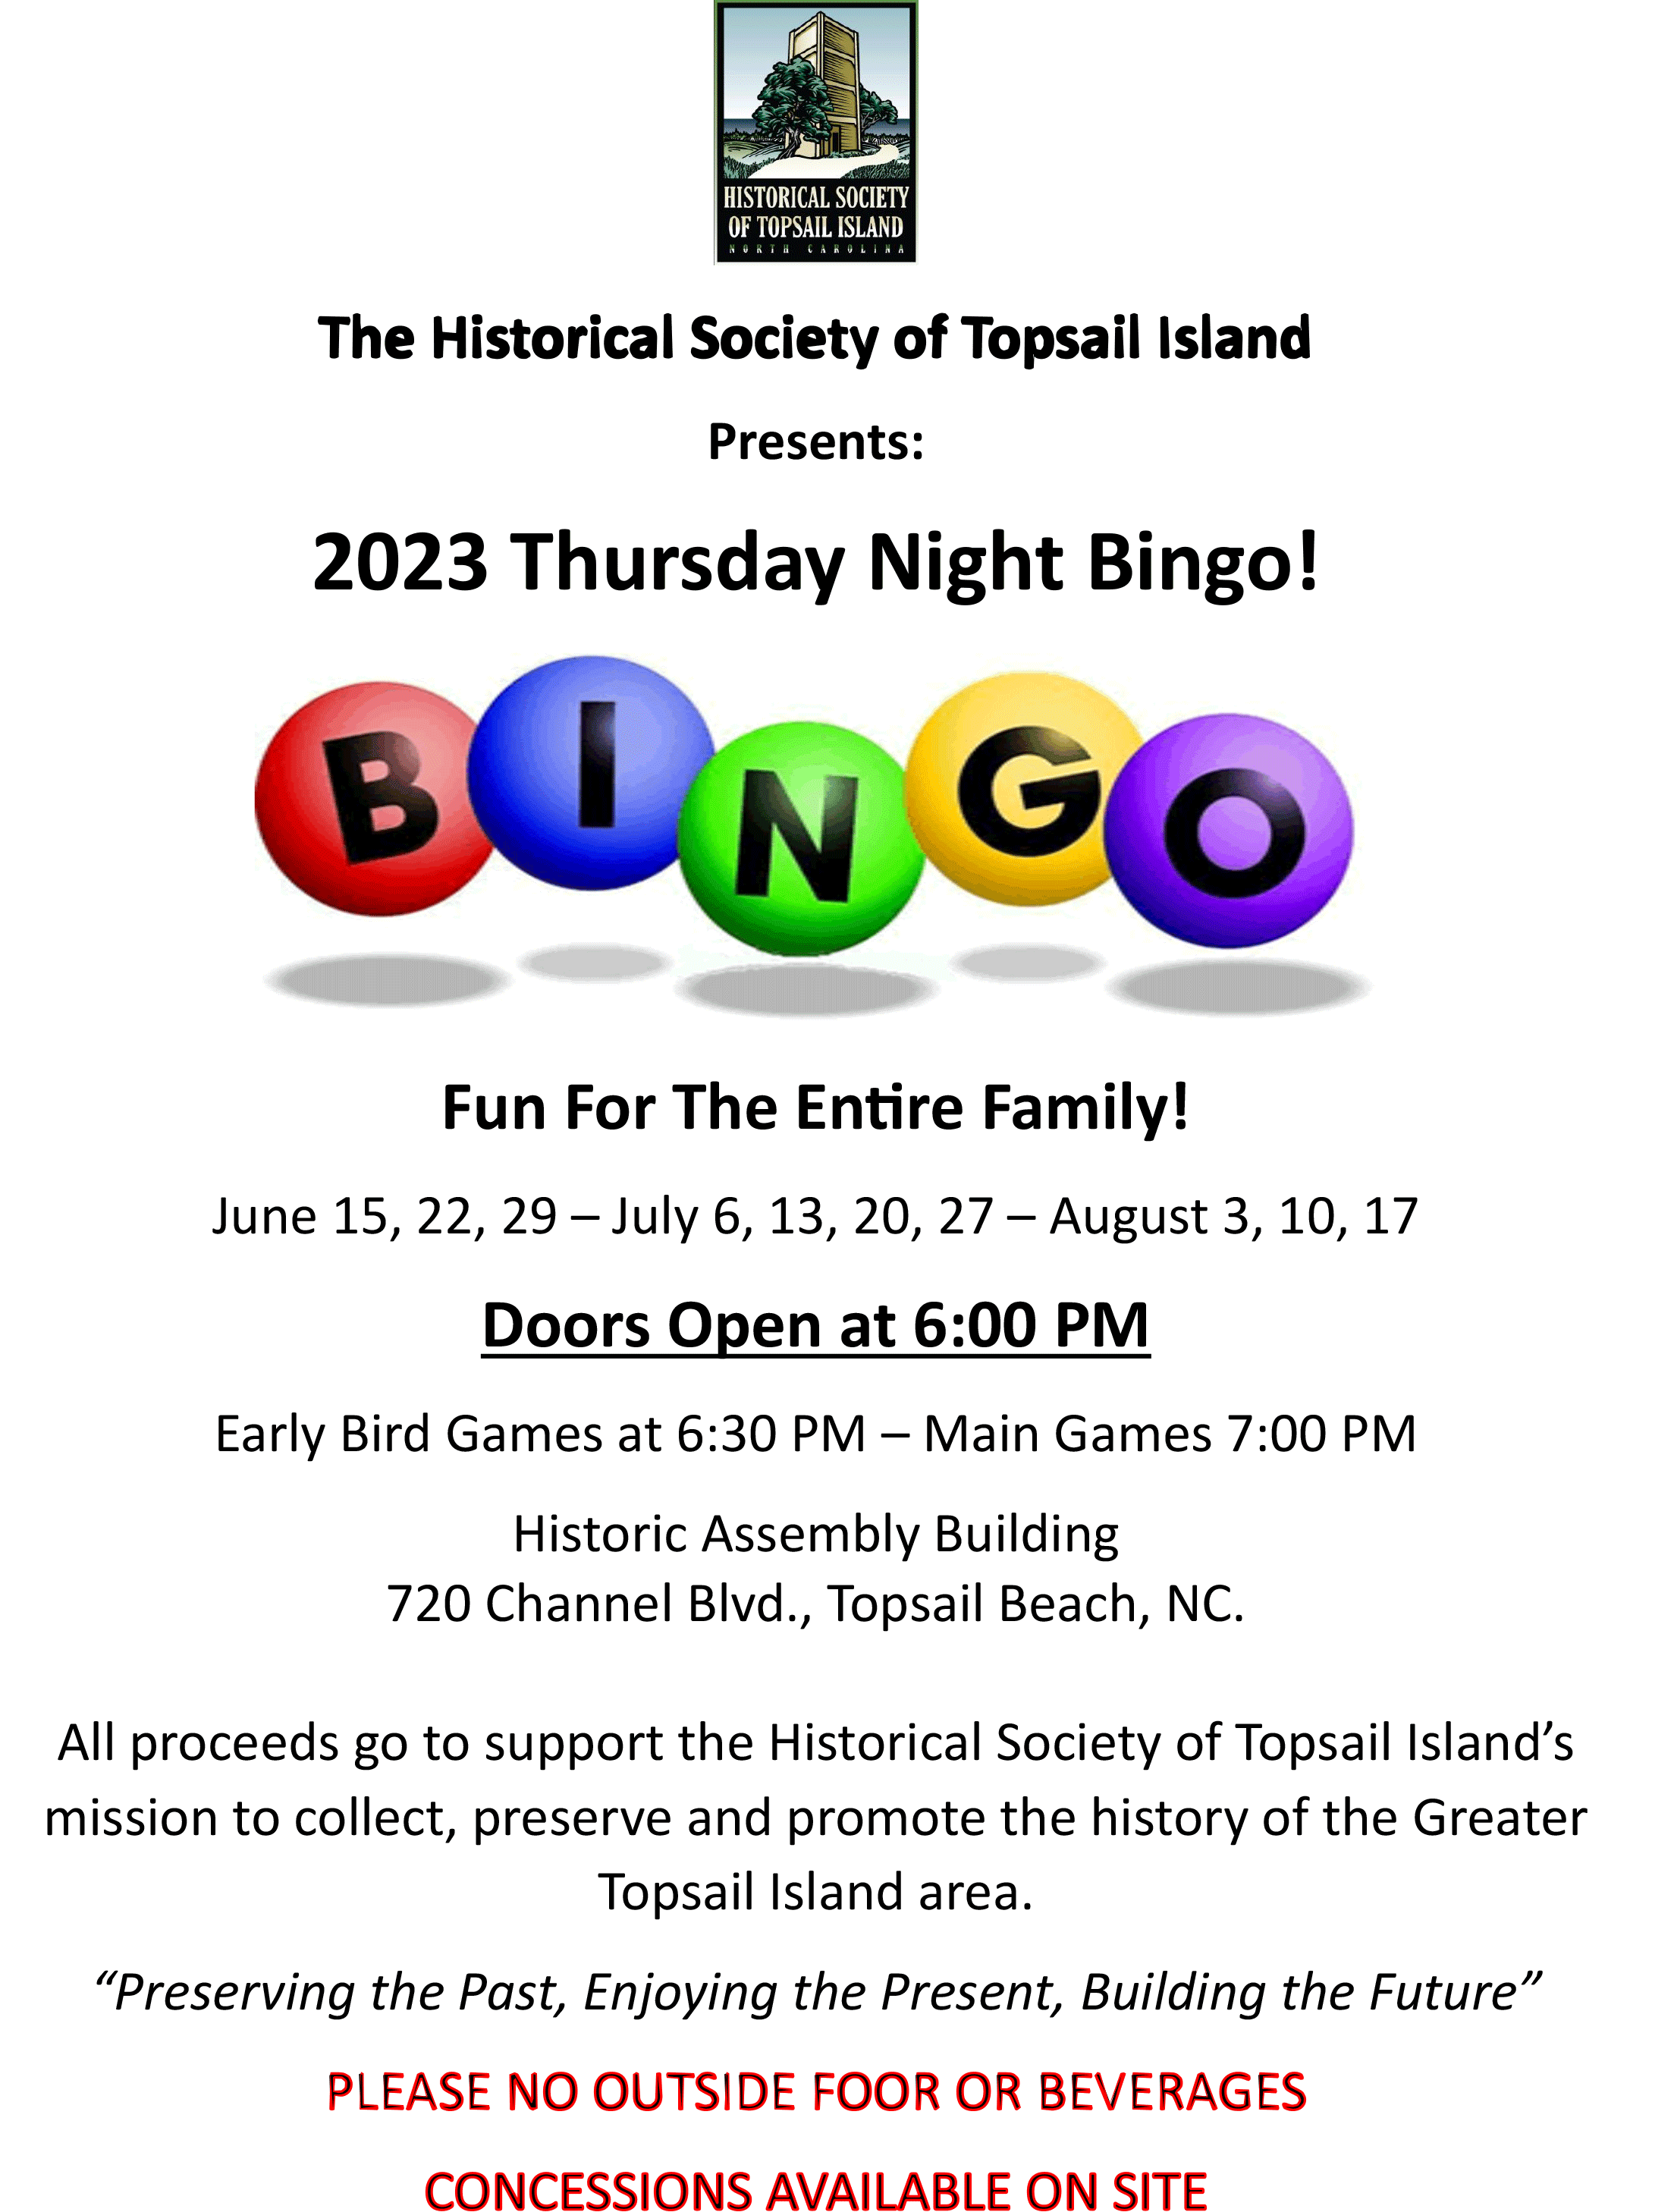 Topsail Historical Society of Topsail Island presents 2023 Thursday Night Bingo